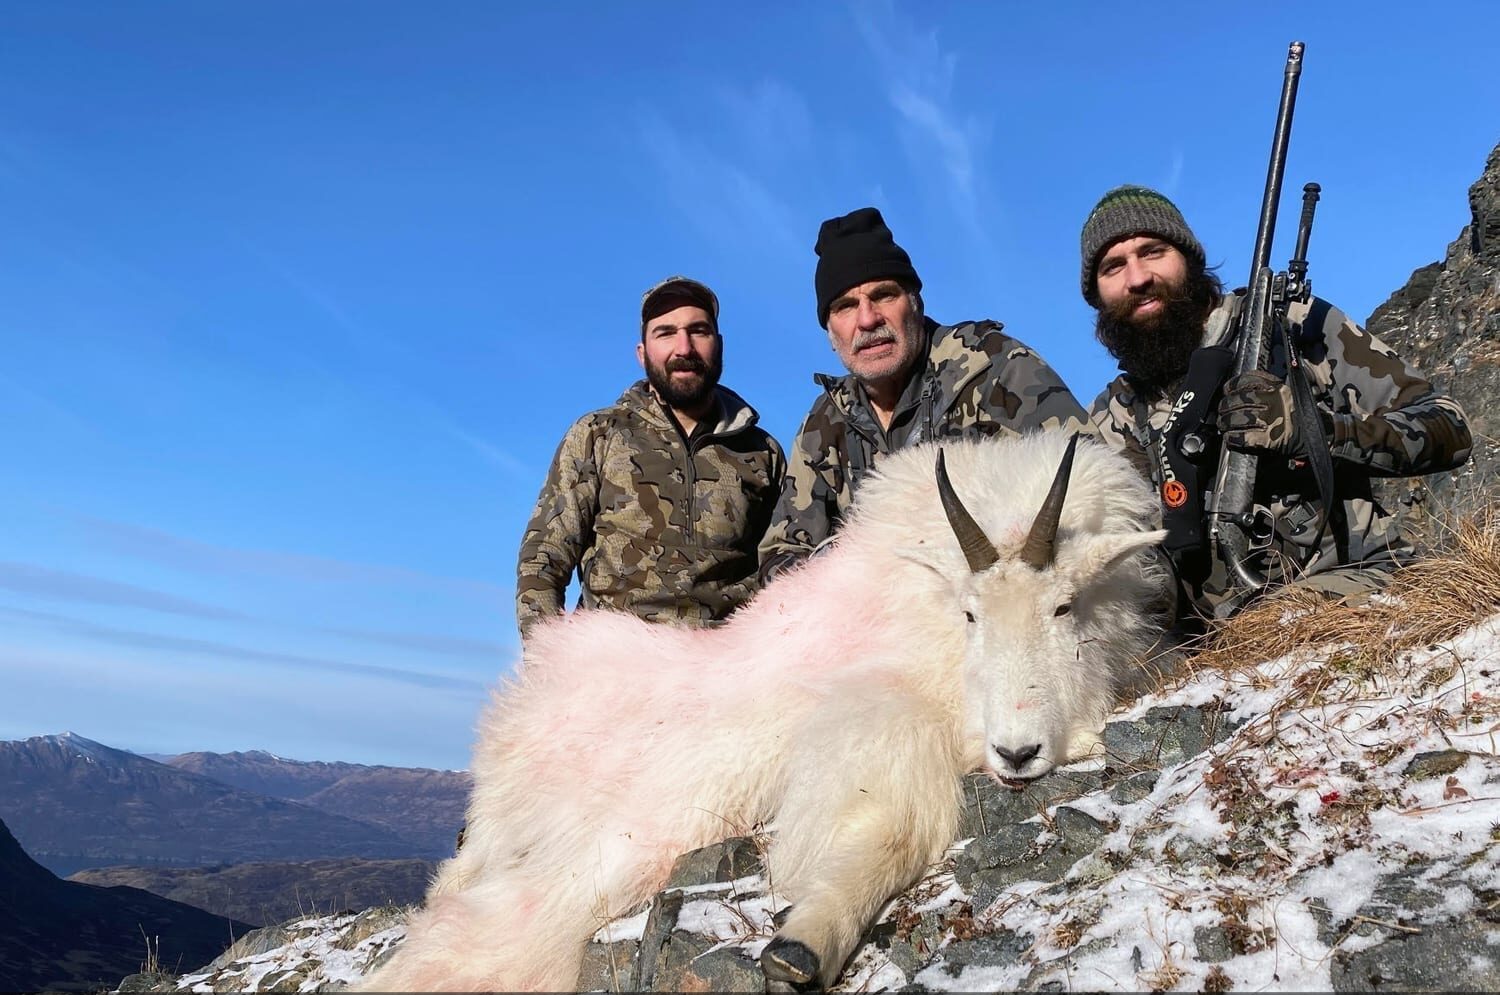 Andy Kissel with an Kodiak Mountain goat